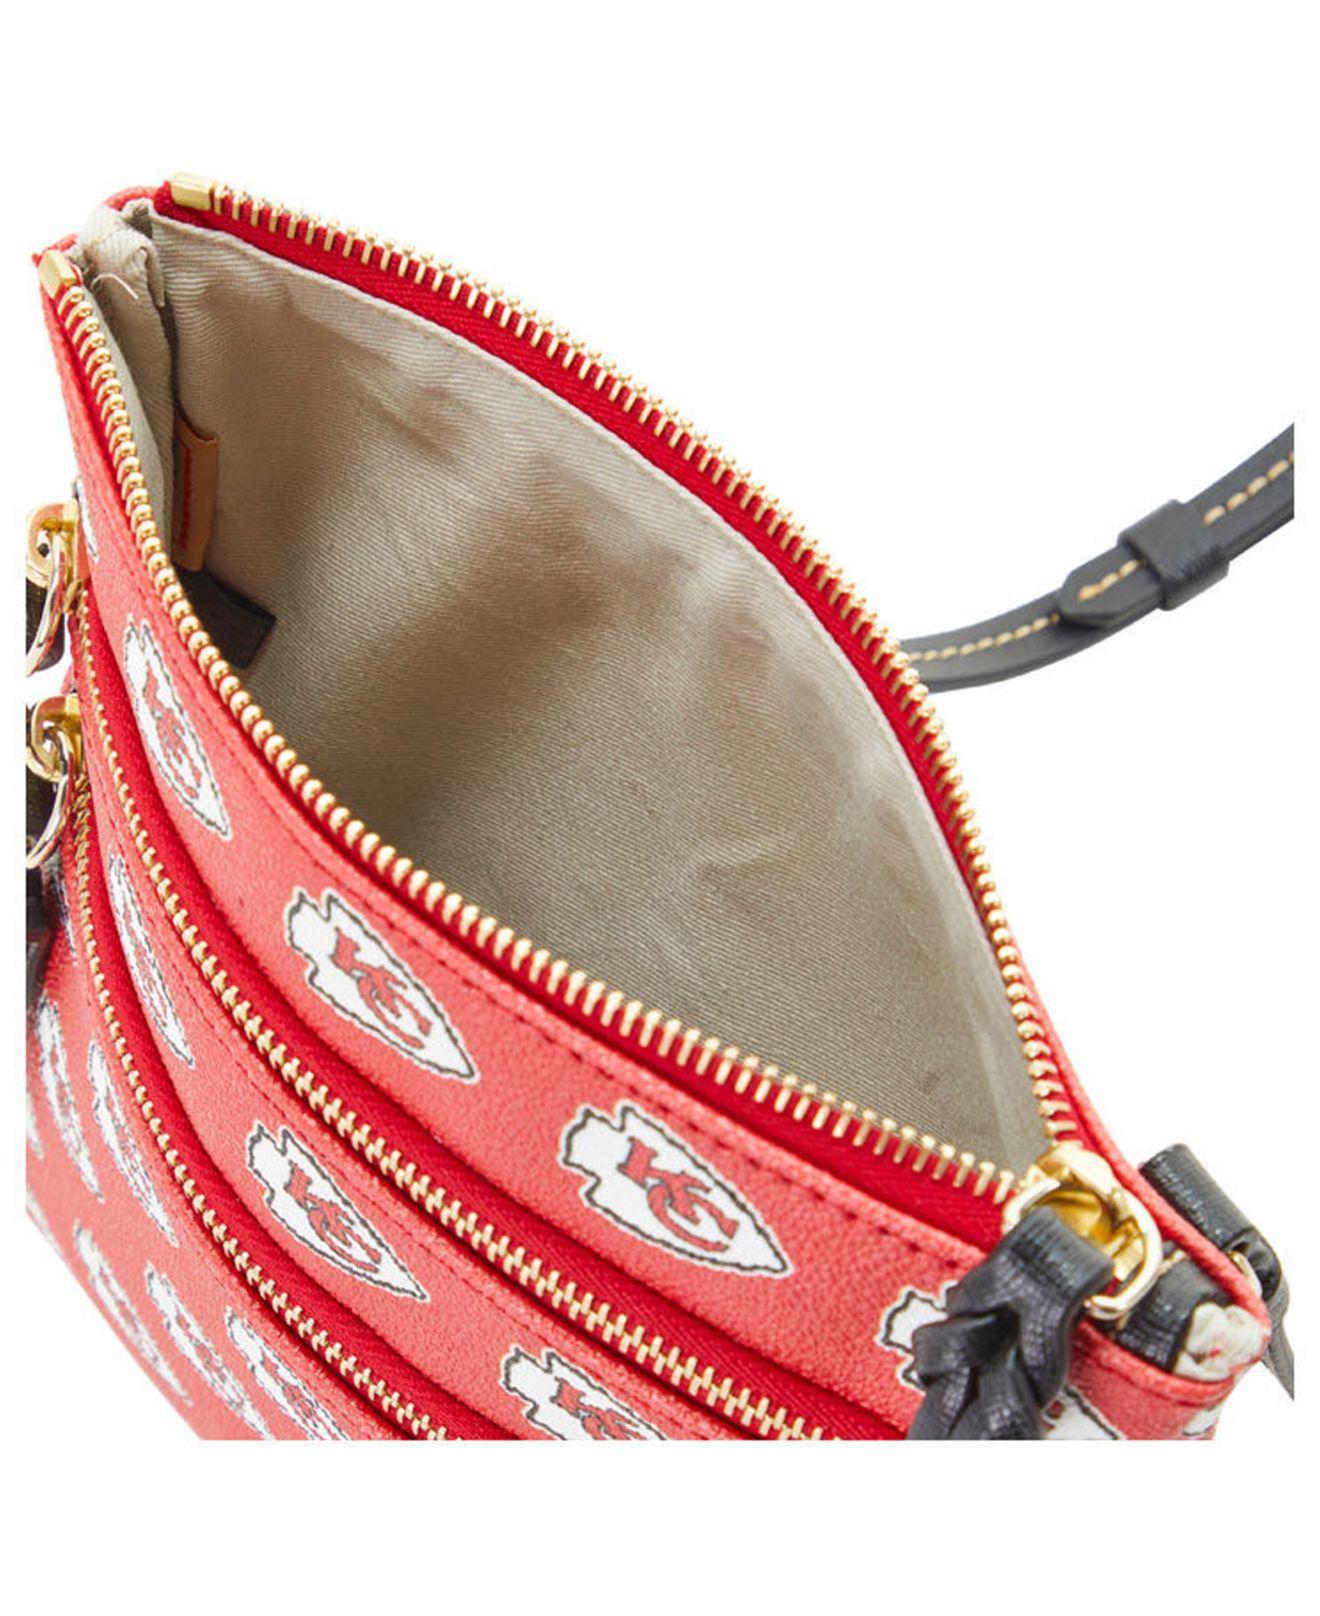 Dooney & Bourke Kansas City Chiefs Sporty Monogram Large Zip Tote Bag